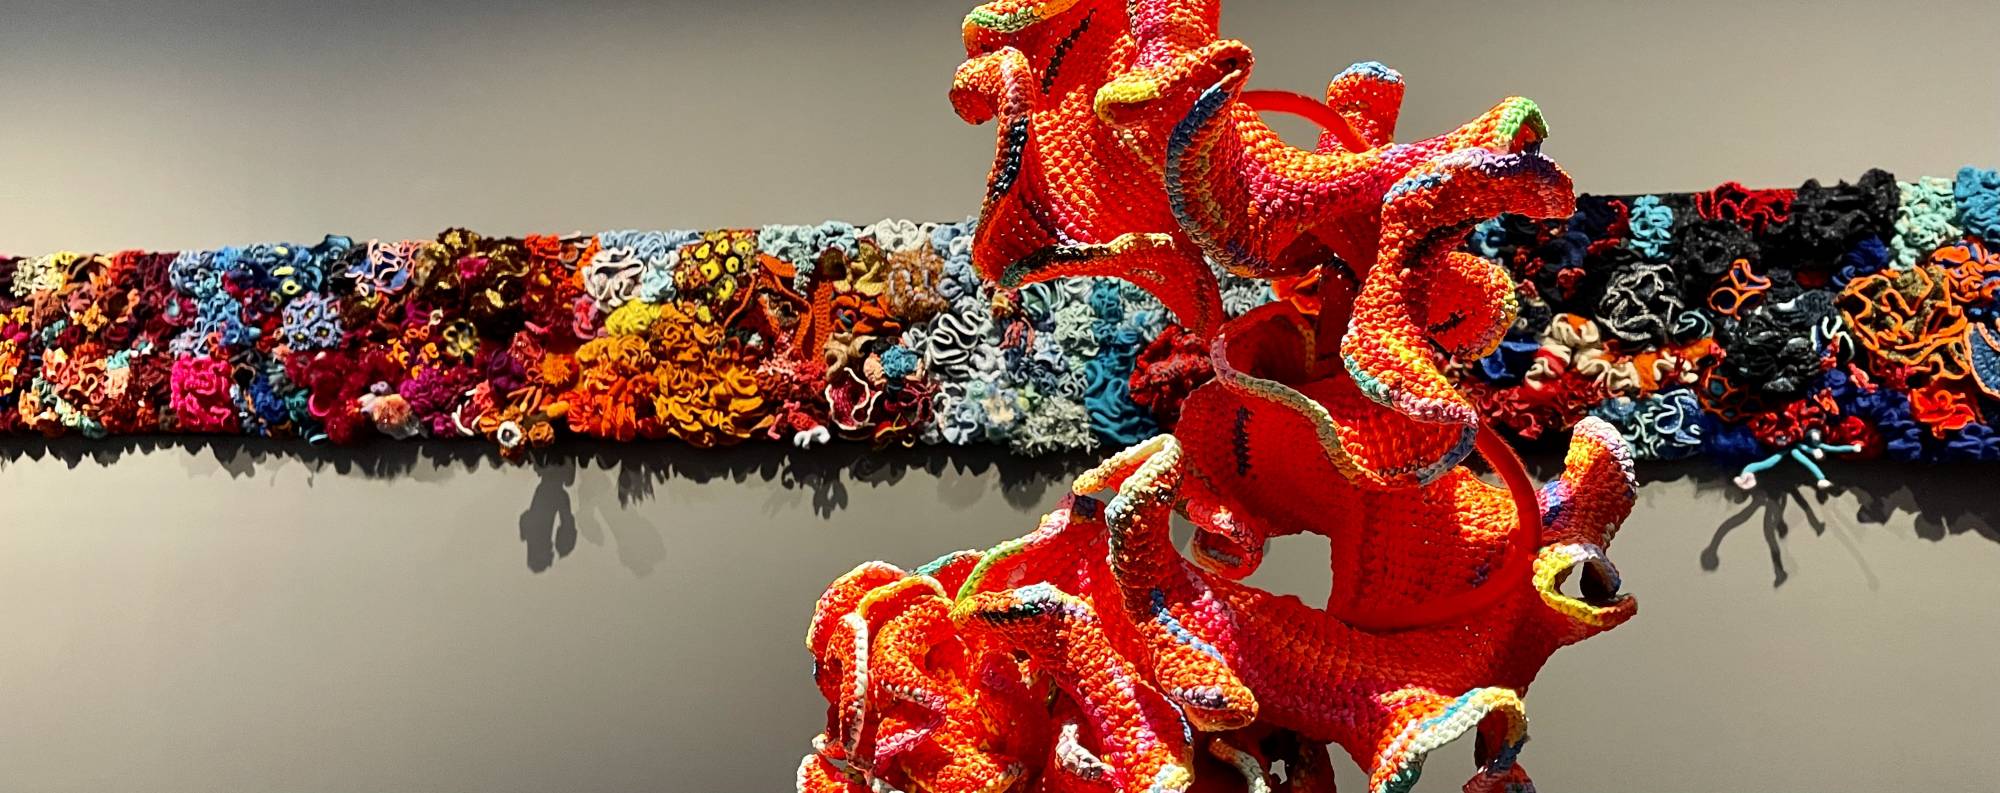 frieze of crochet corals at Museum frieder burda